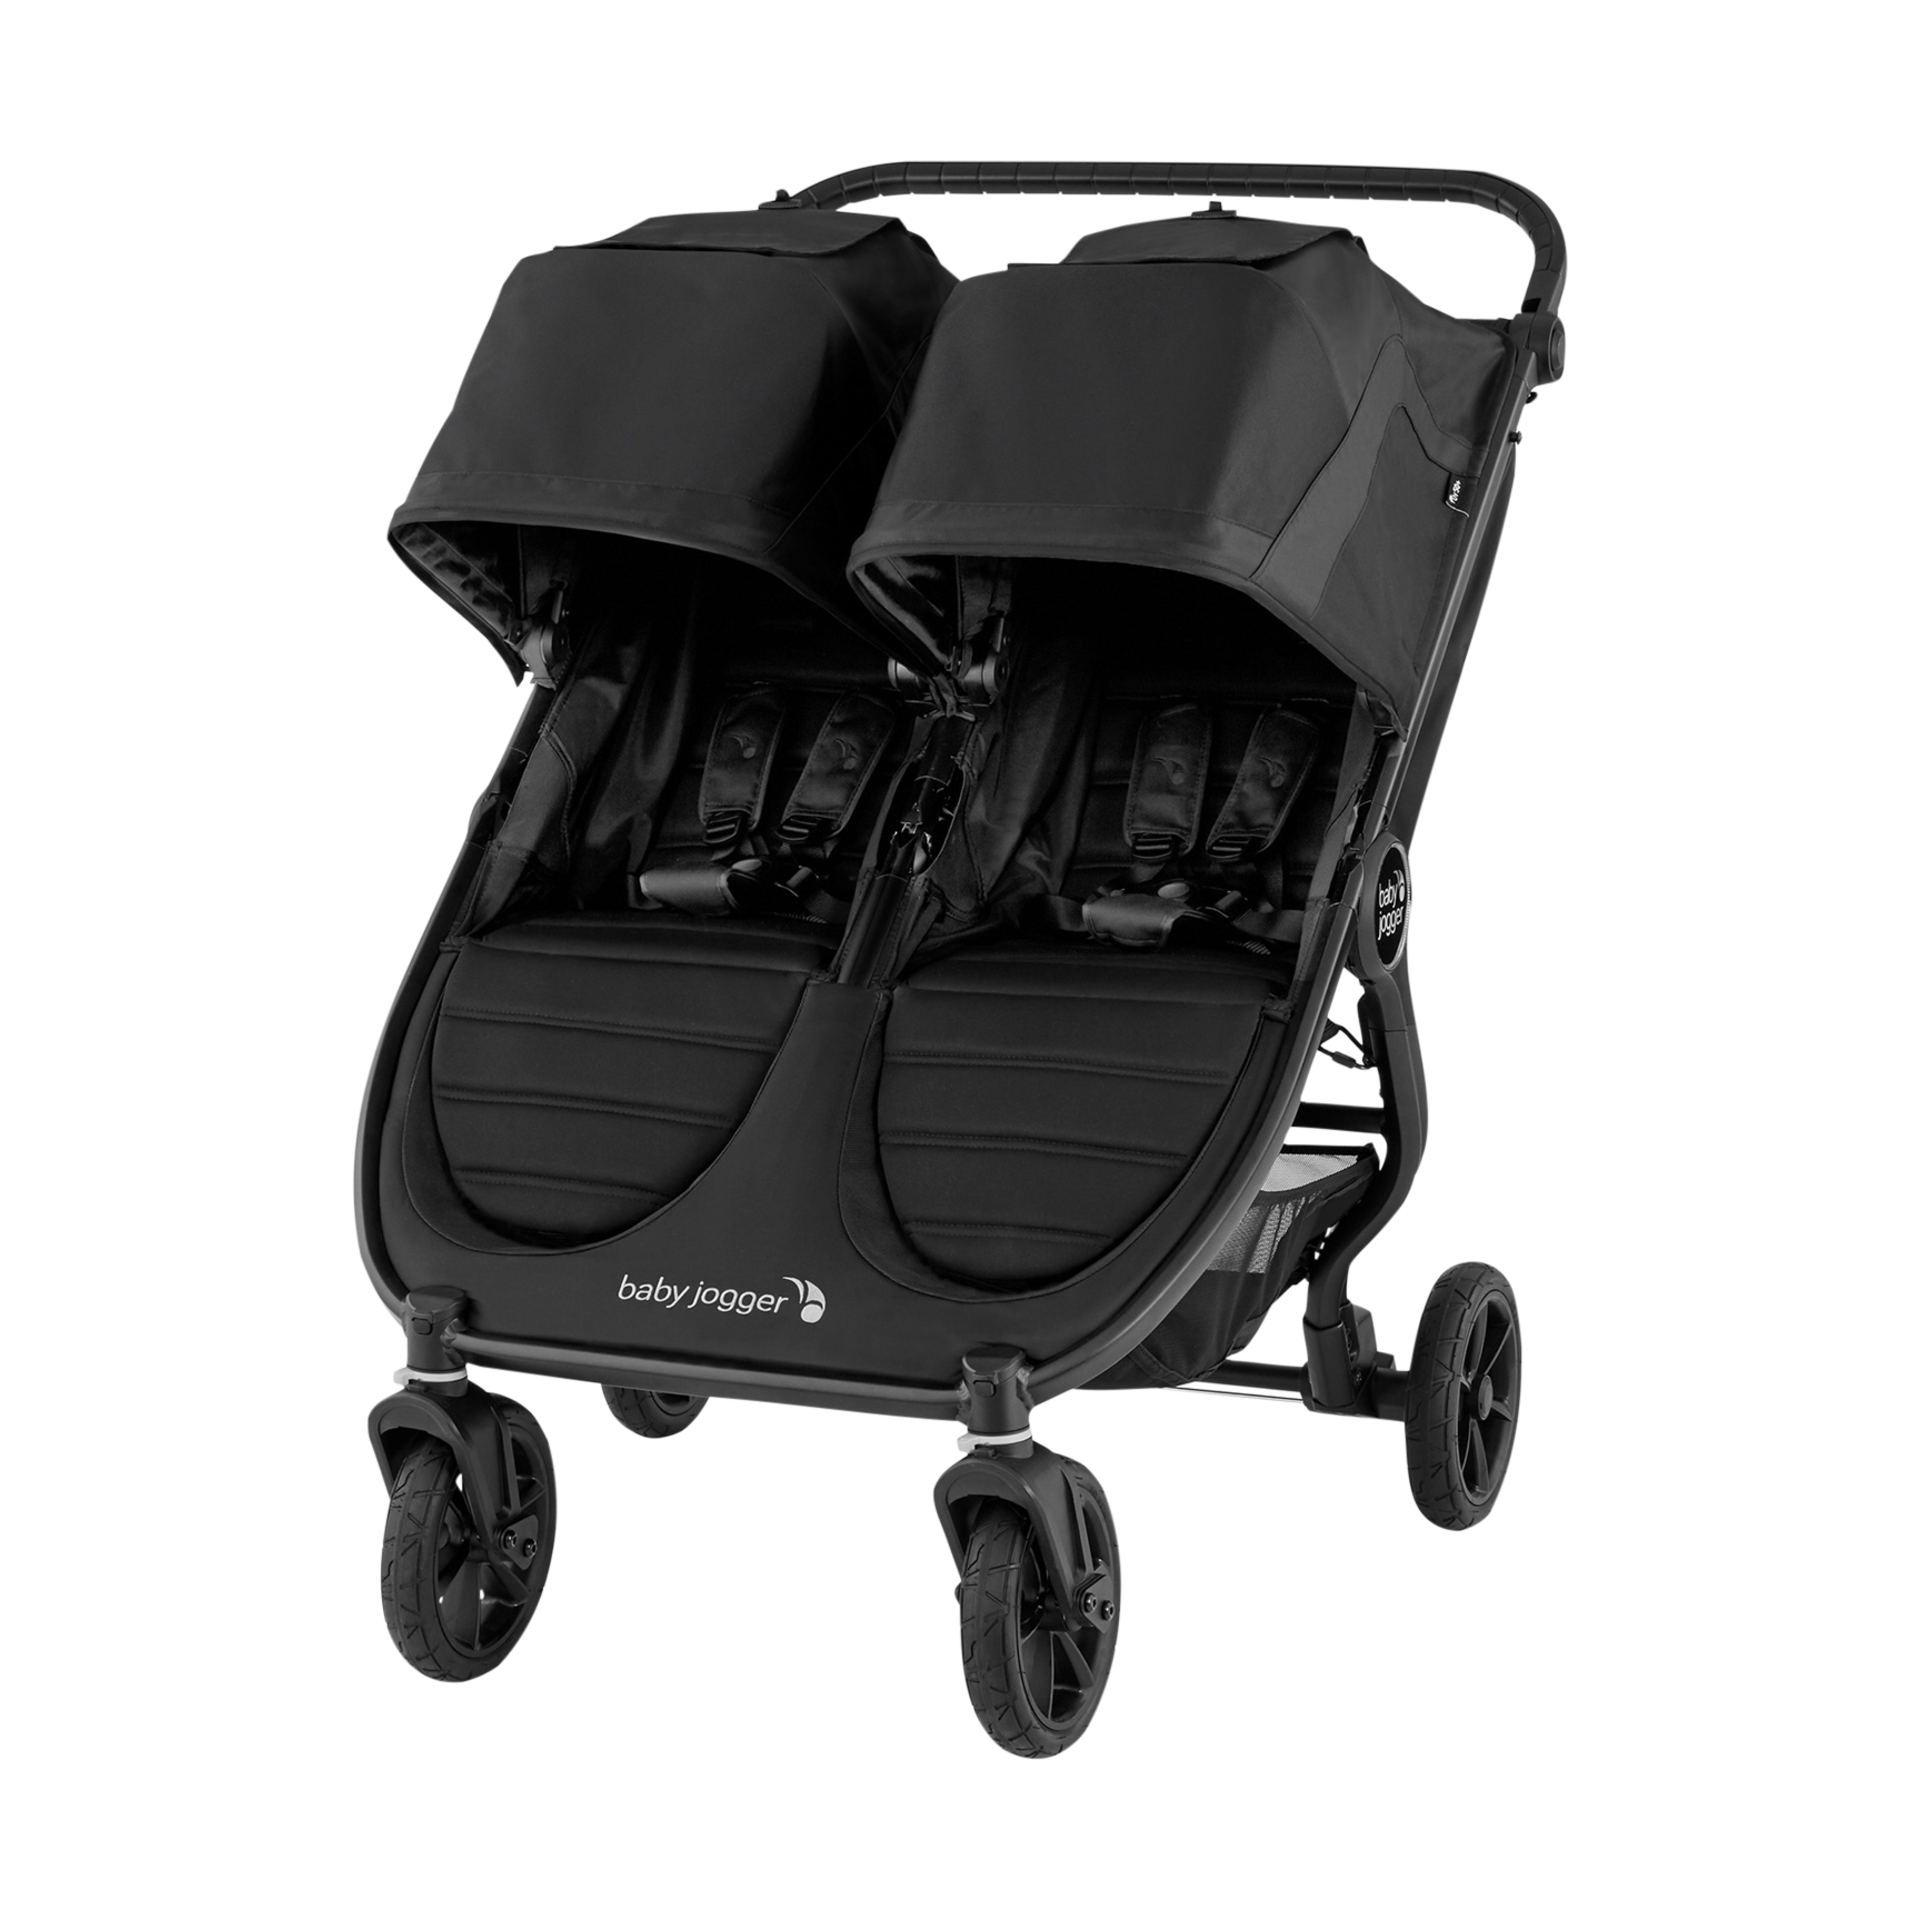 city mini baby jogger double stroller